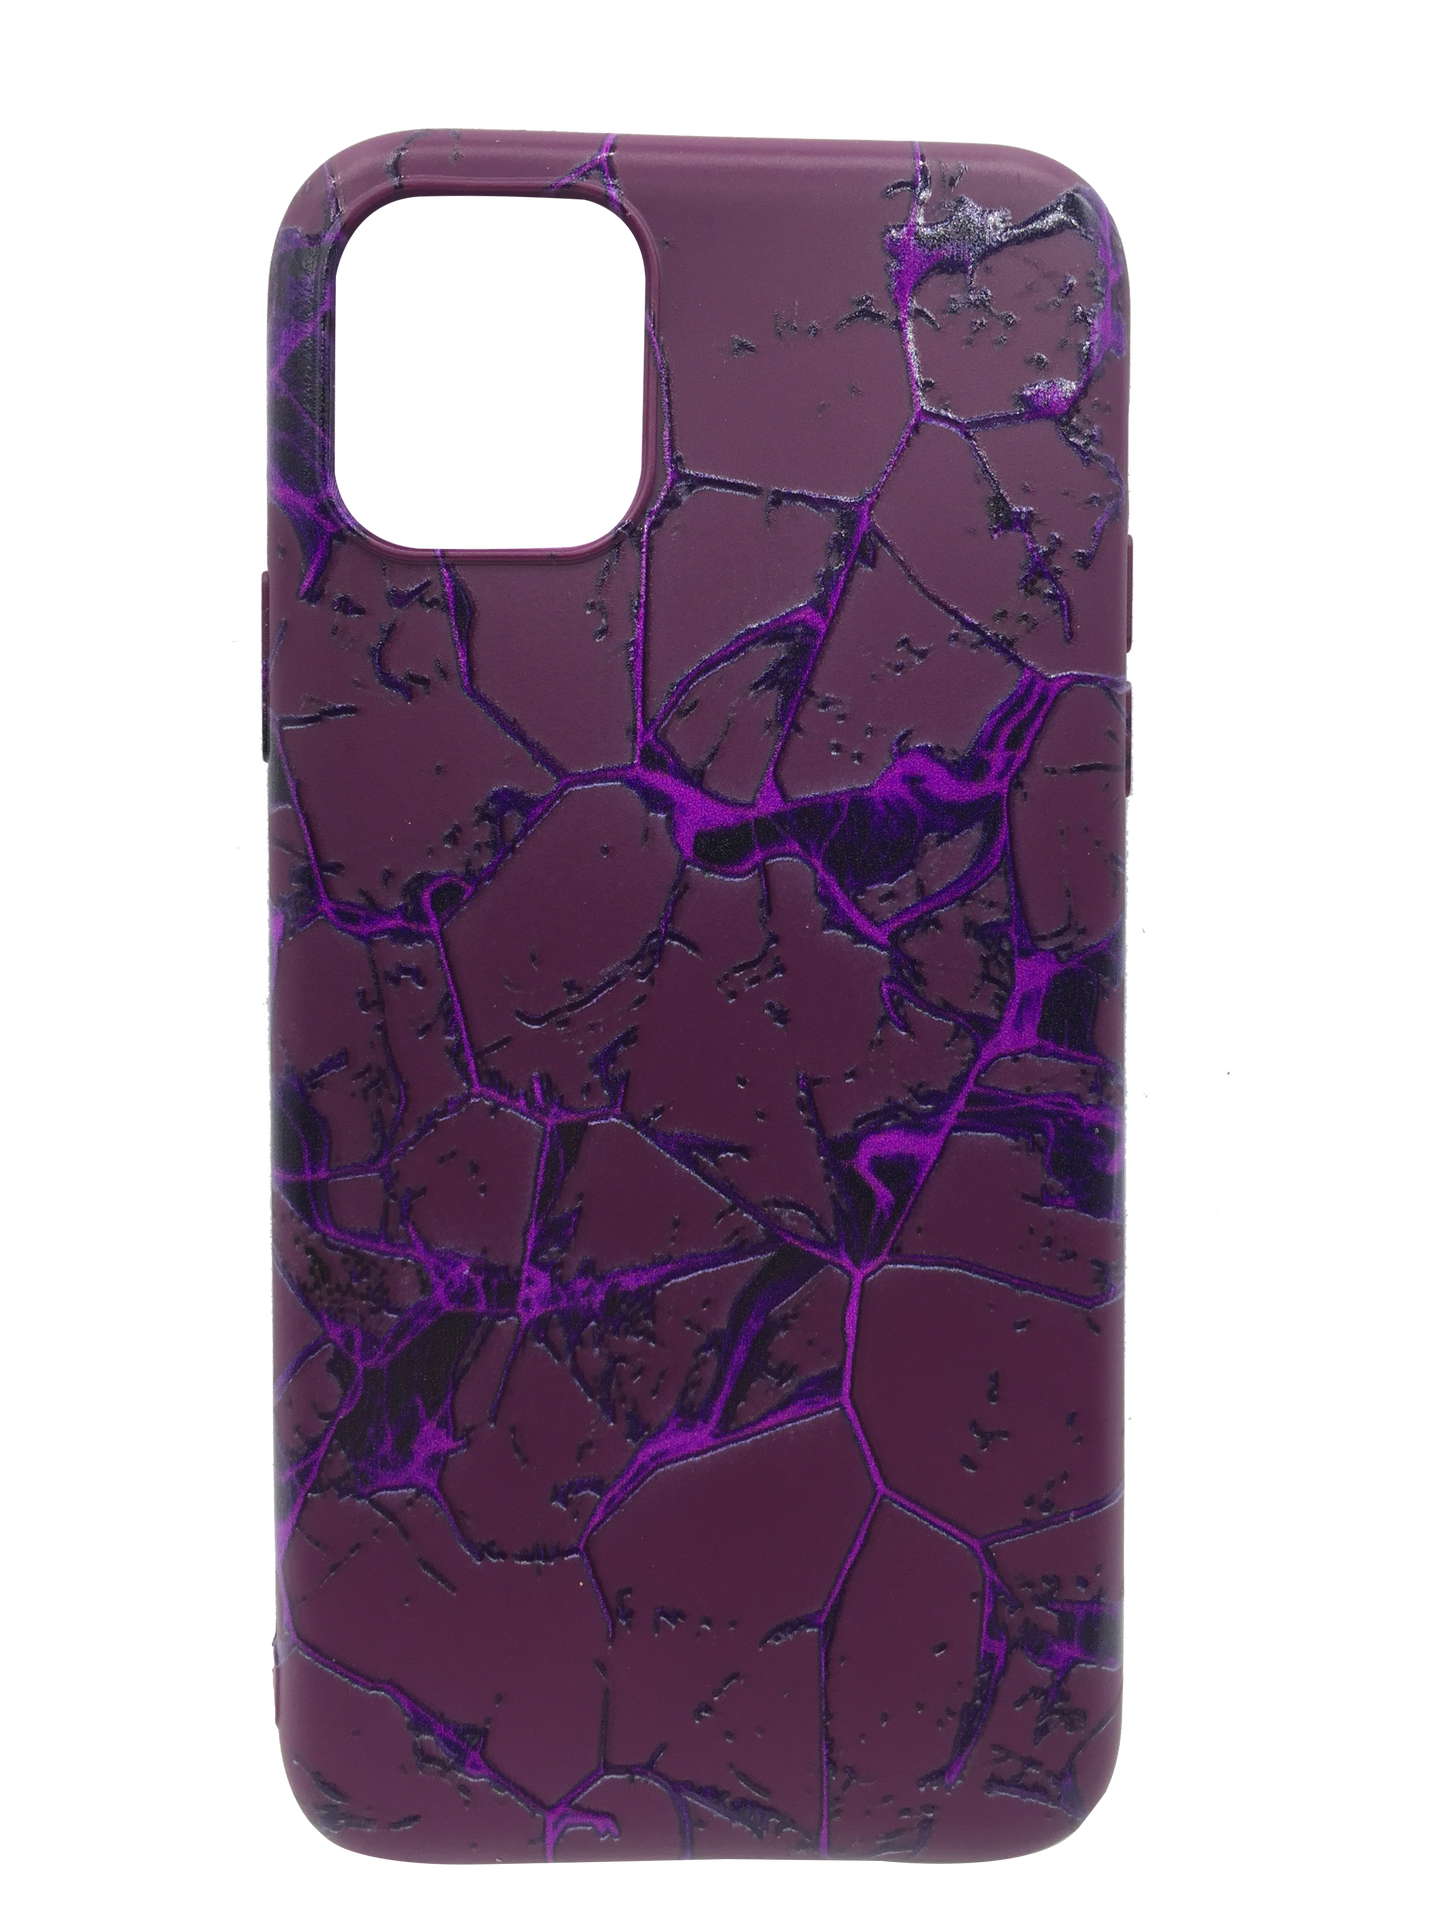 Silicone case iPHONE 11 PURPLE